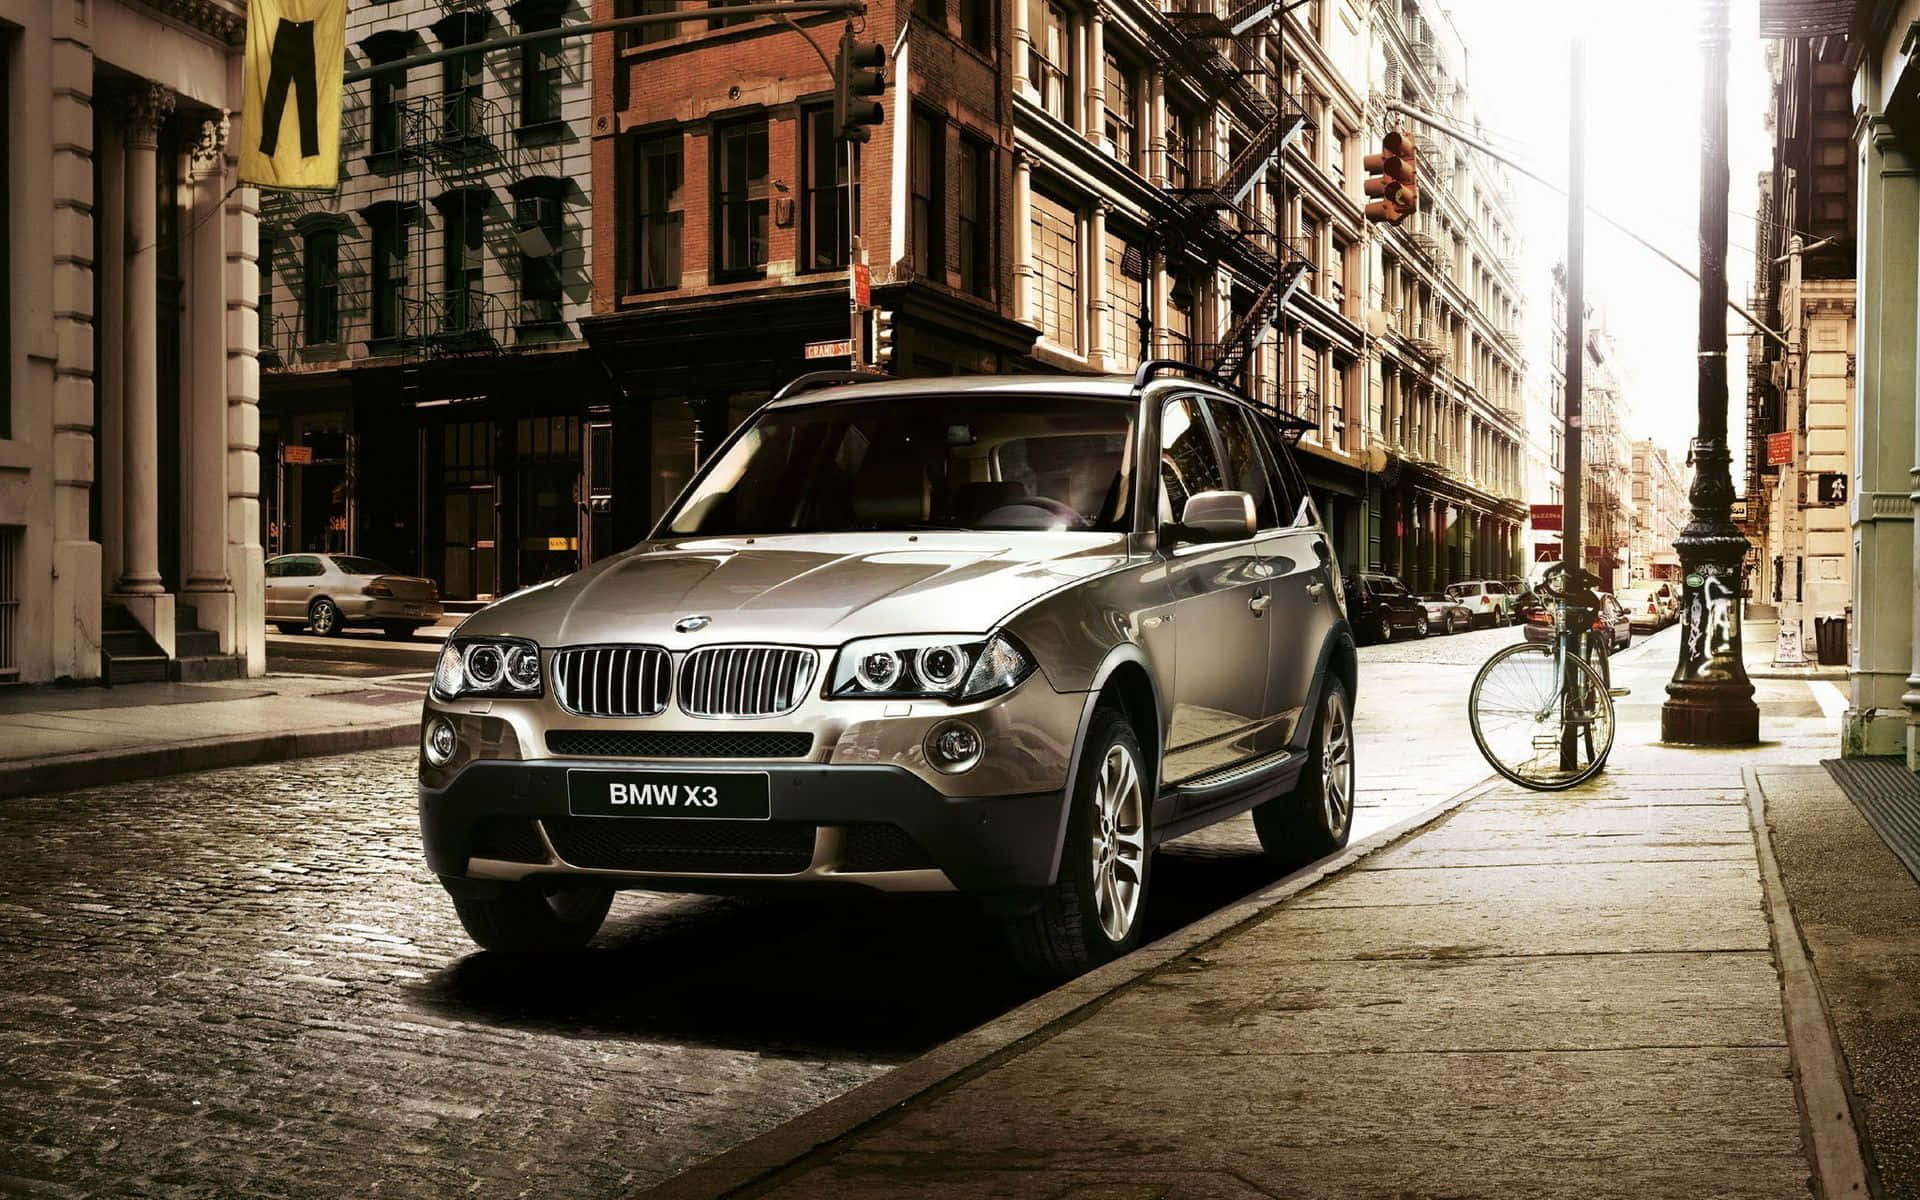 Exceptional Luxury - BMW X3 Wallpaper